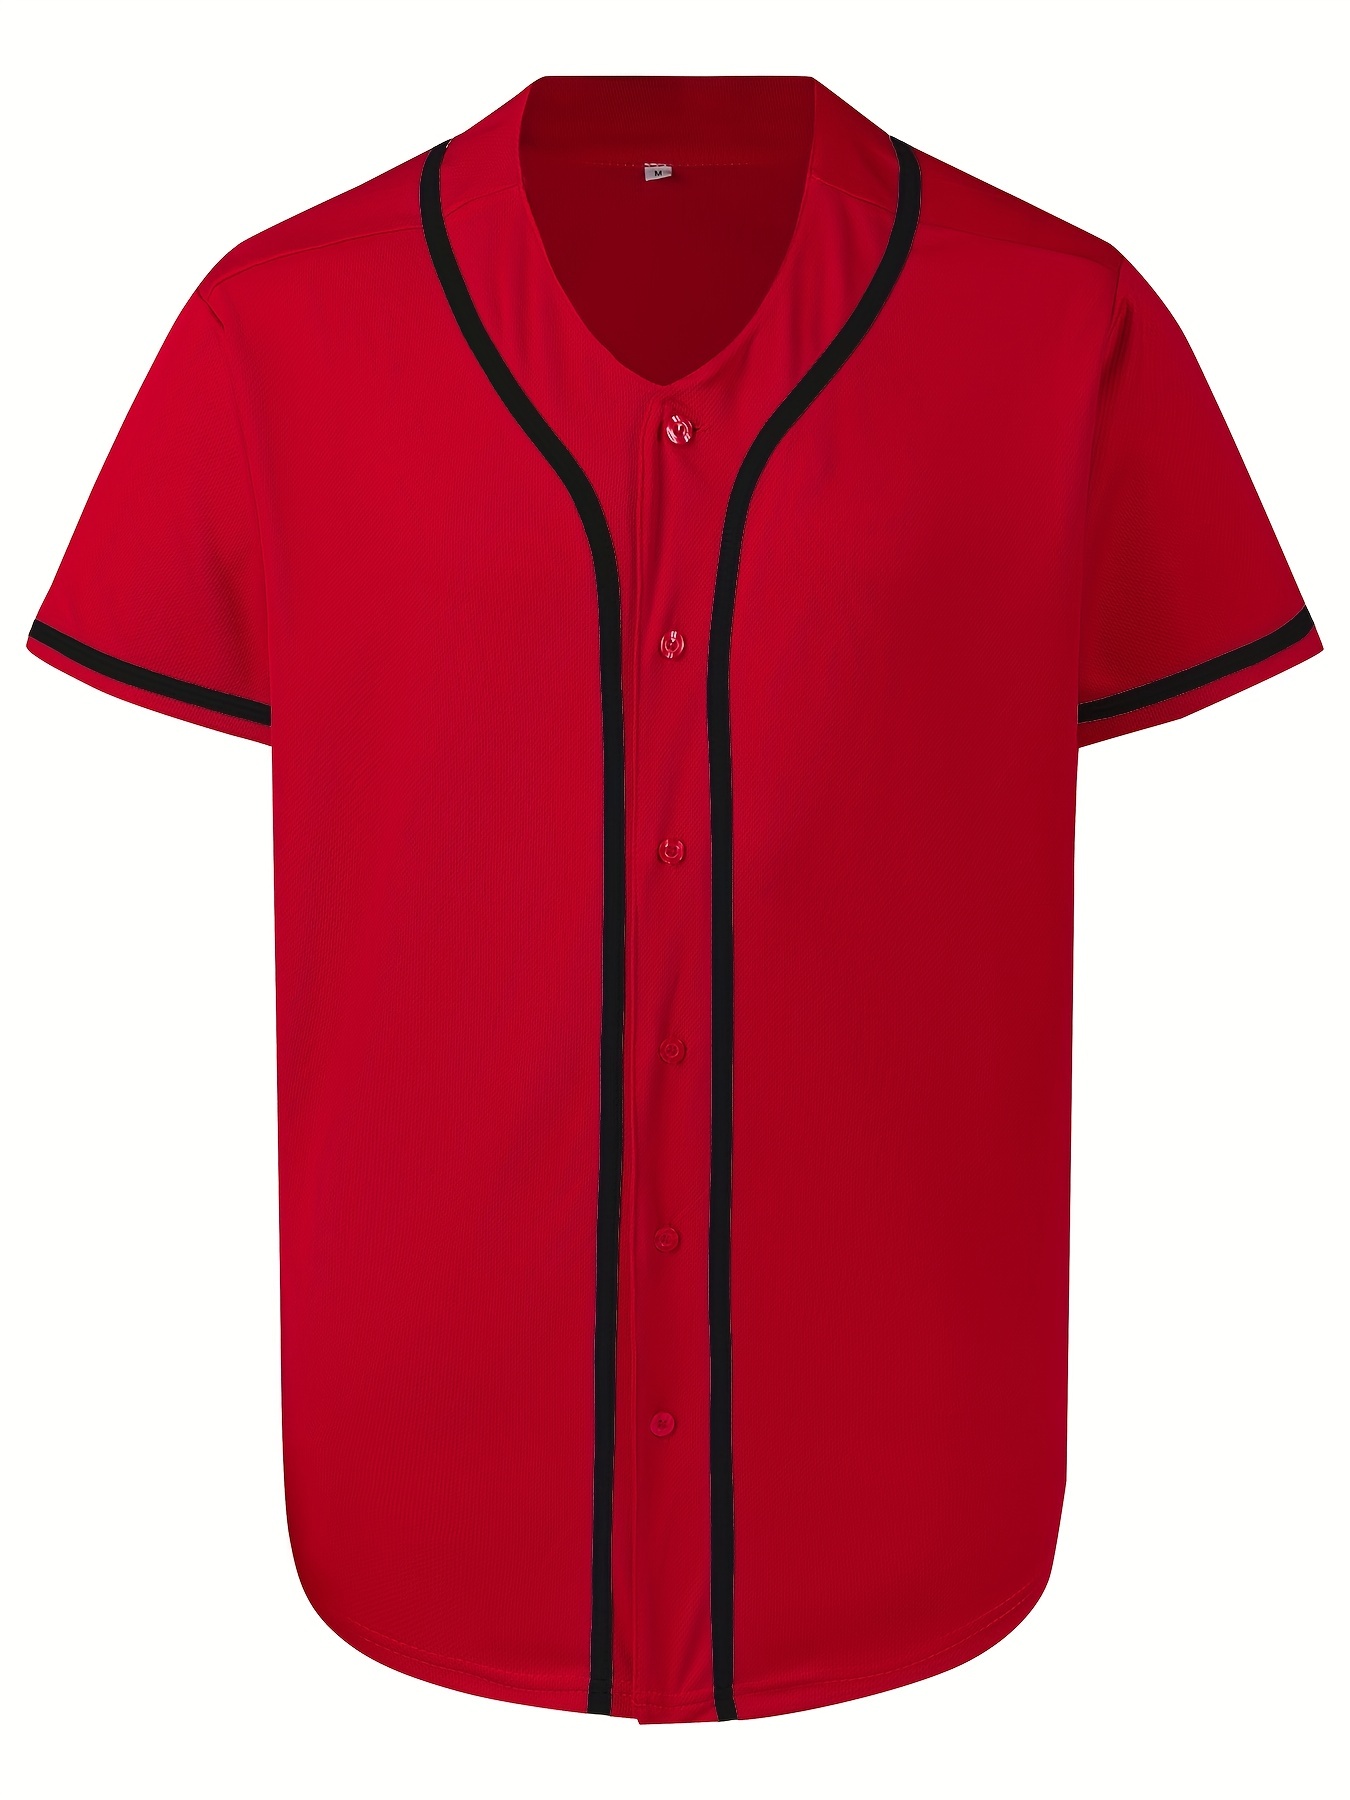 Leather Short Sleeve Baseball Shirt Hip Hop #23 Star